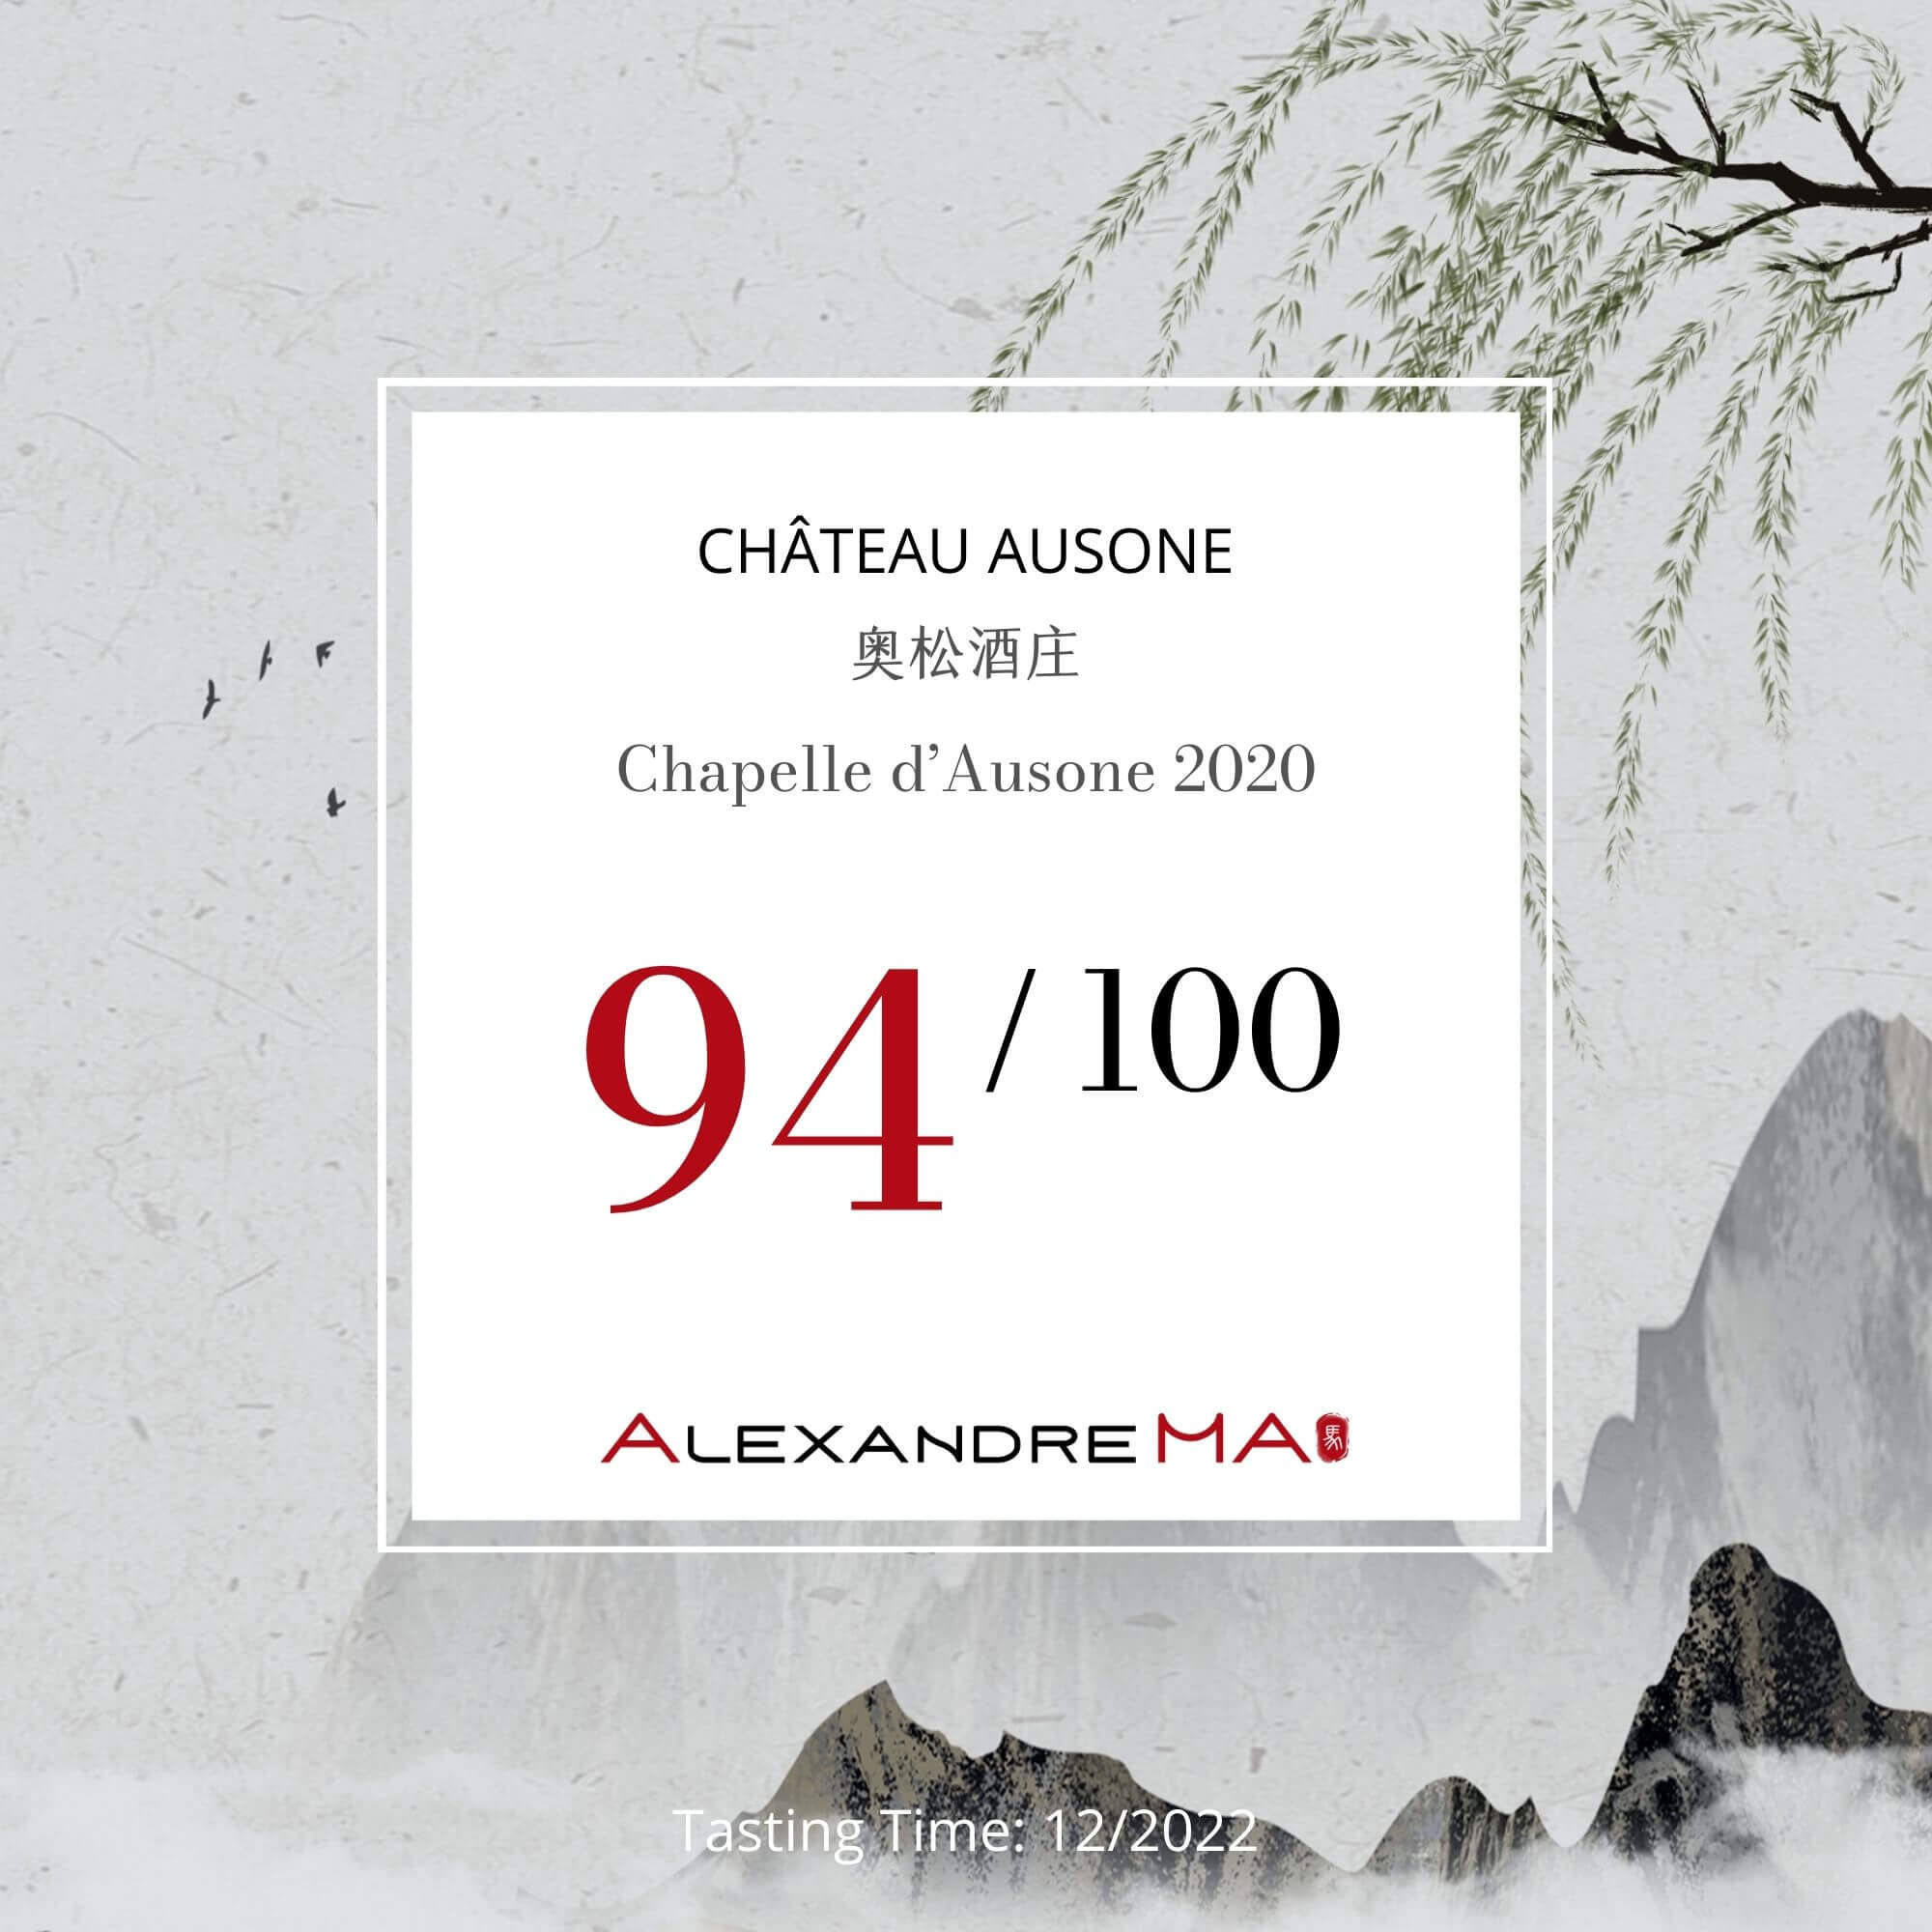 Chapelle d’Ausone 2020 - Alexandre MA